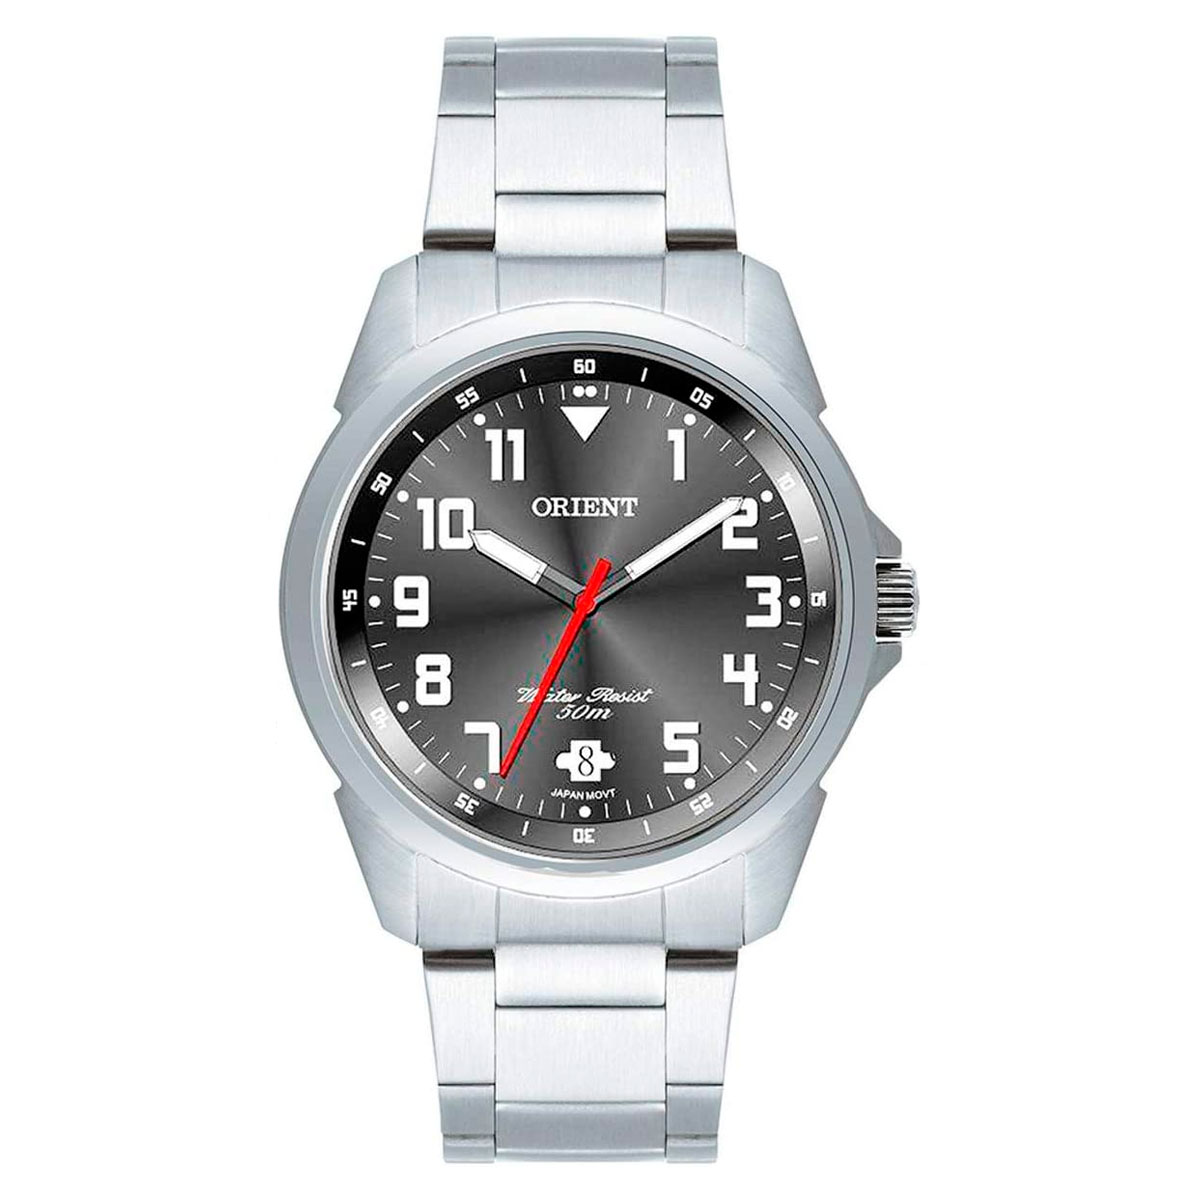 Relógio Masculino Orient - Prata - MBSS1154AG2SX